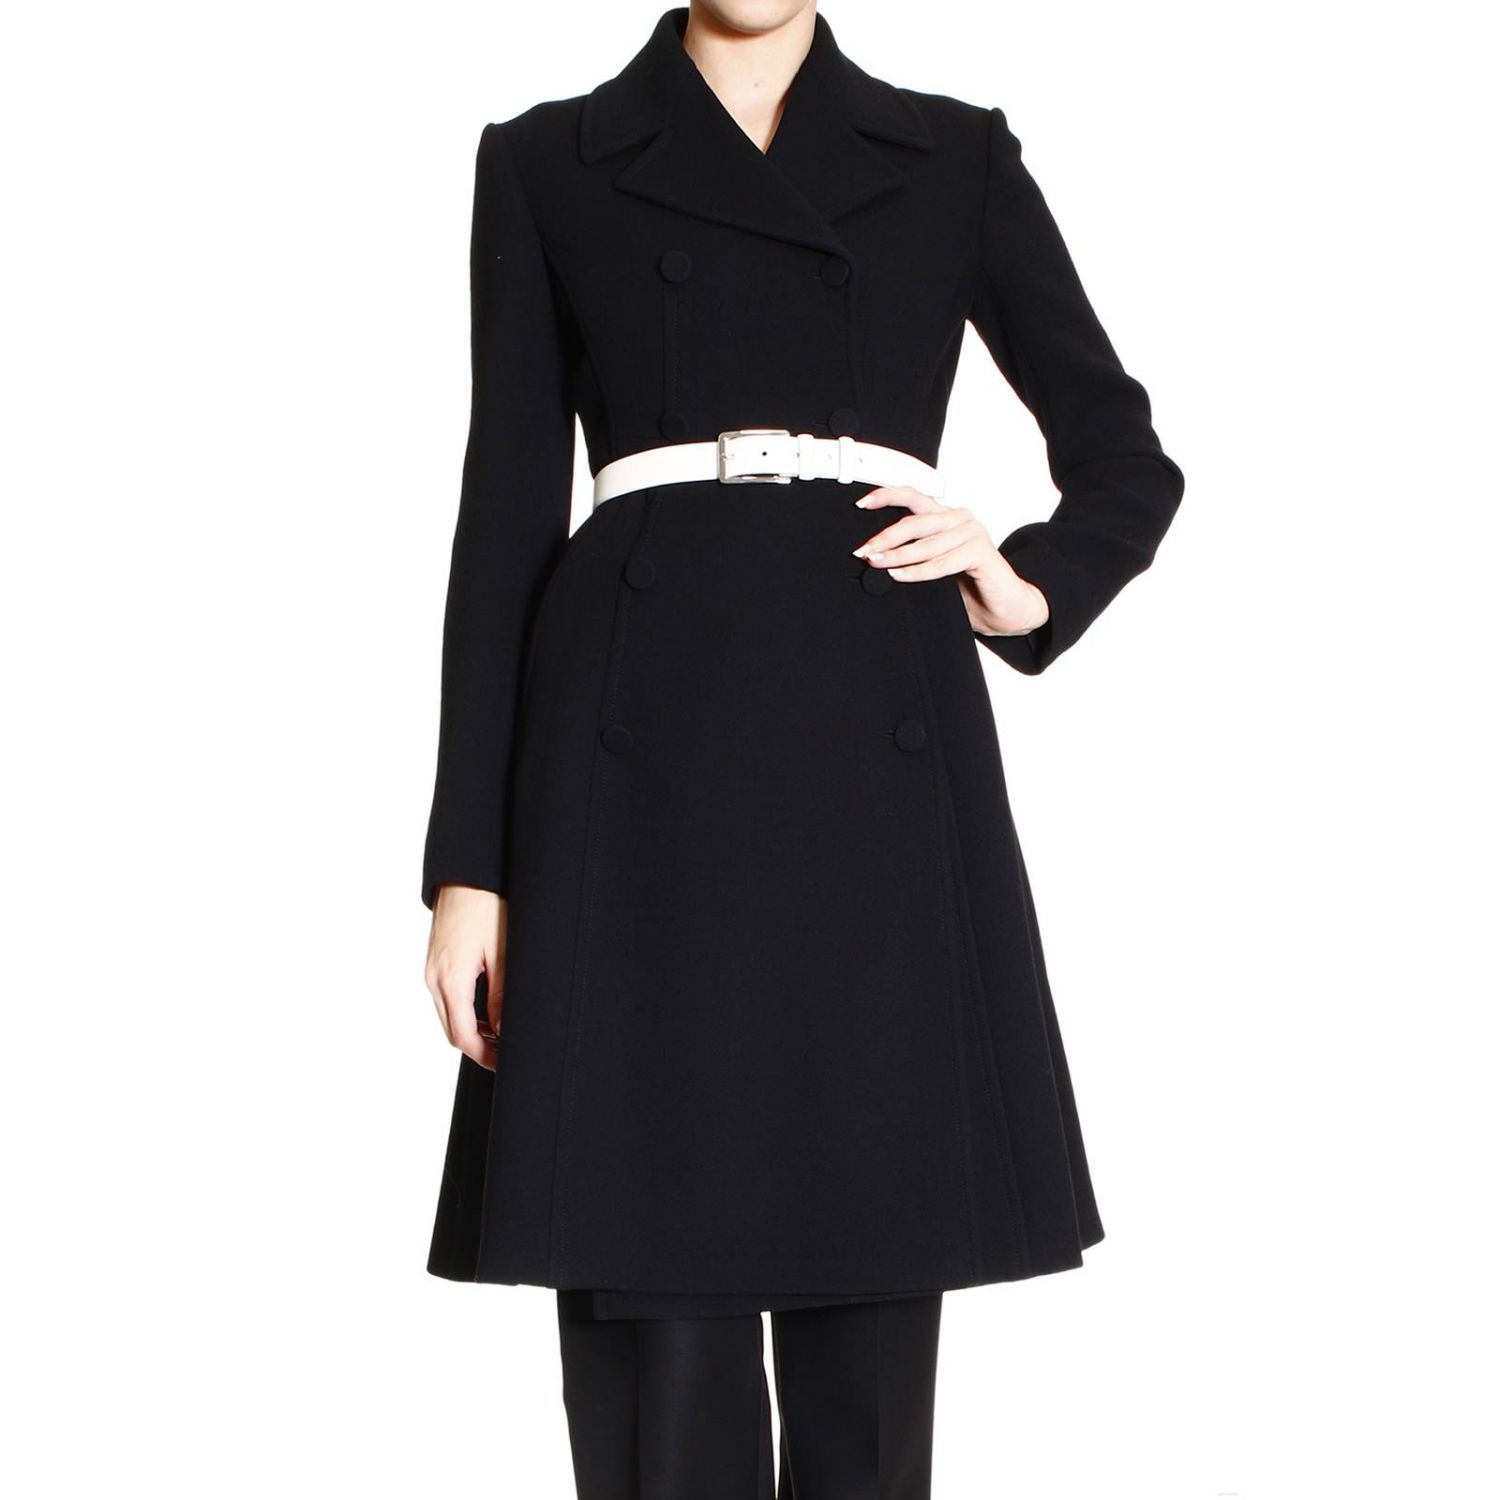 Christian Dior Outlet: | Coat Christian Dior Women Black | Coat ...